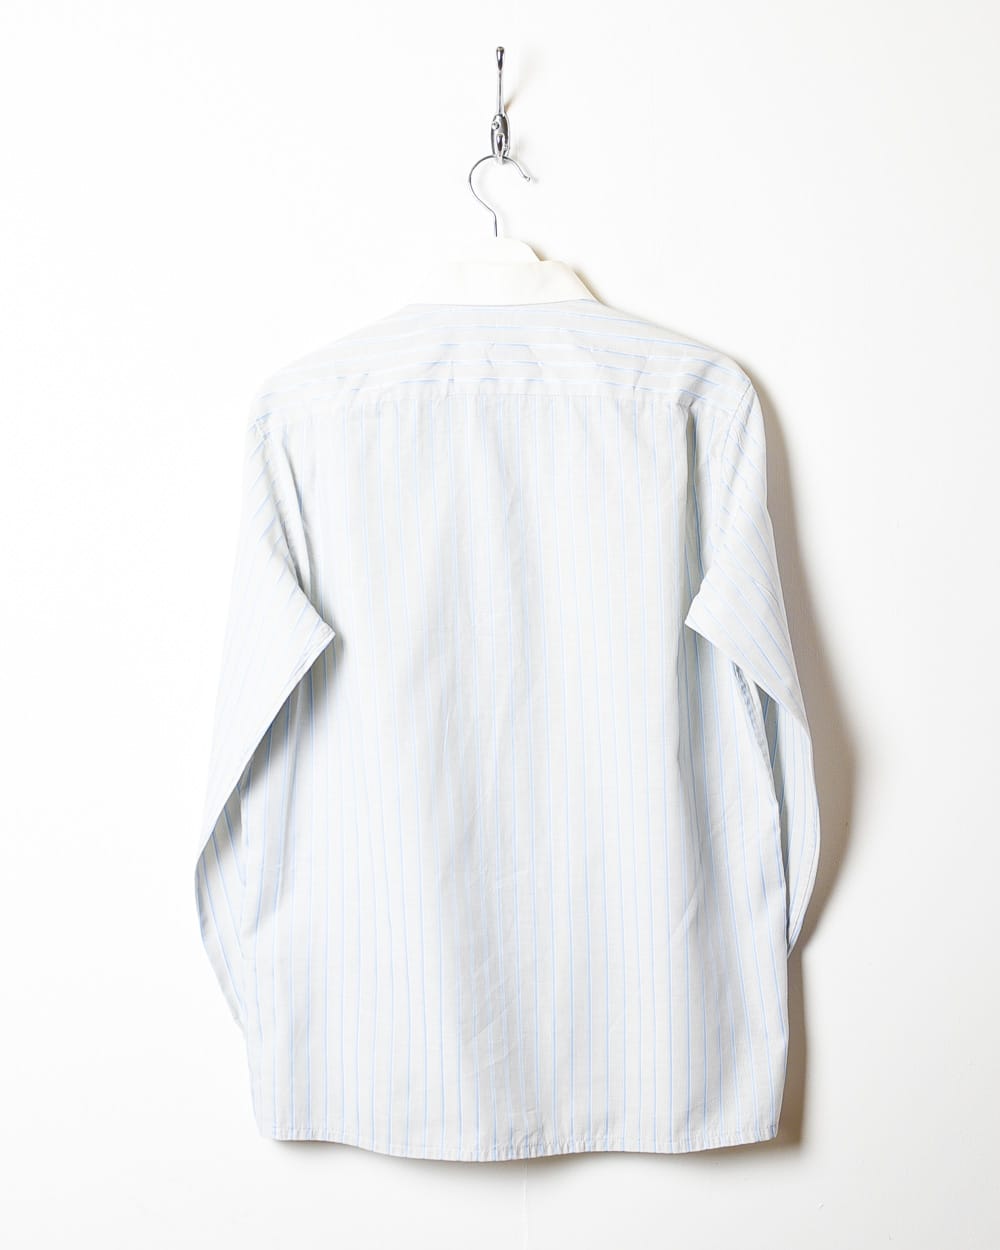 Stone Yves Saint Laurent Chemise Striped Shirt - Small